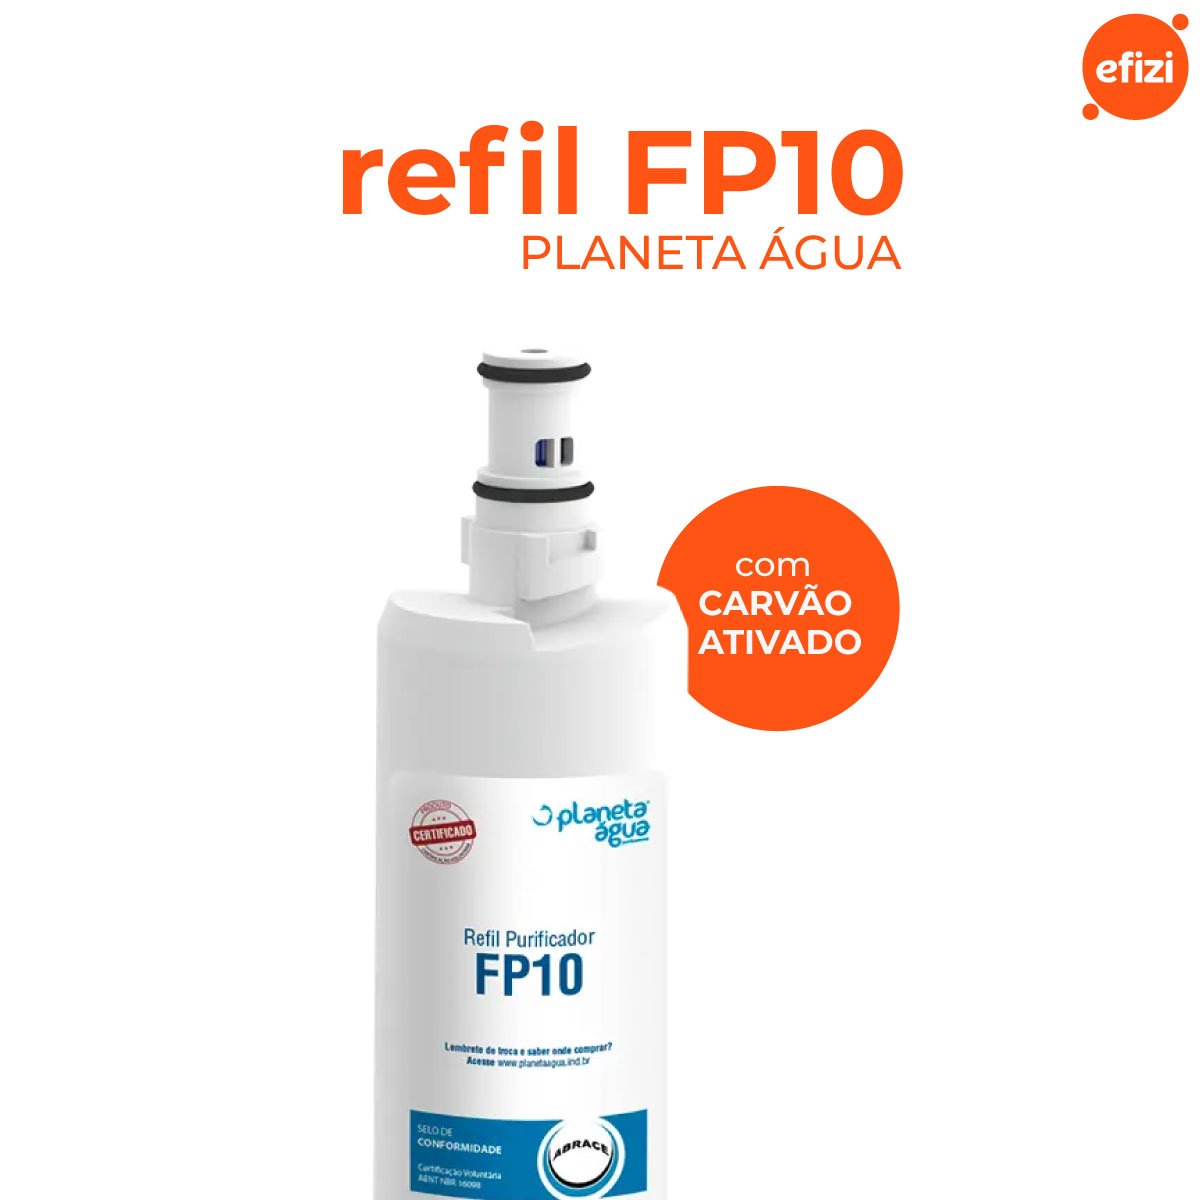 Refil Filtro Fp10 para Purificador Consul Planeta Água - 2